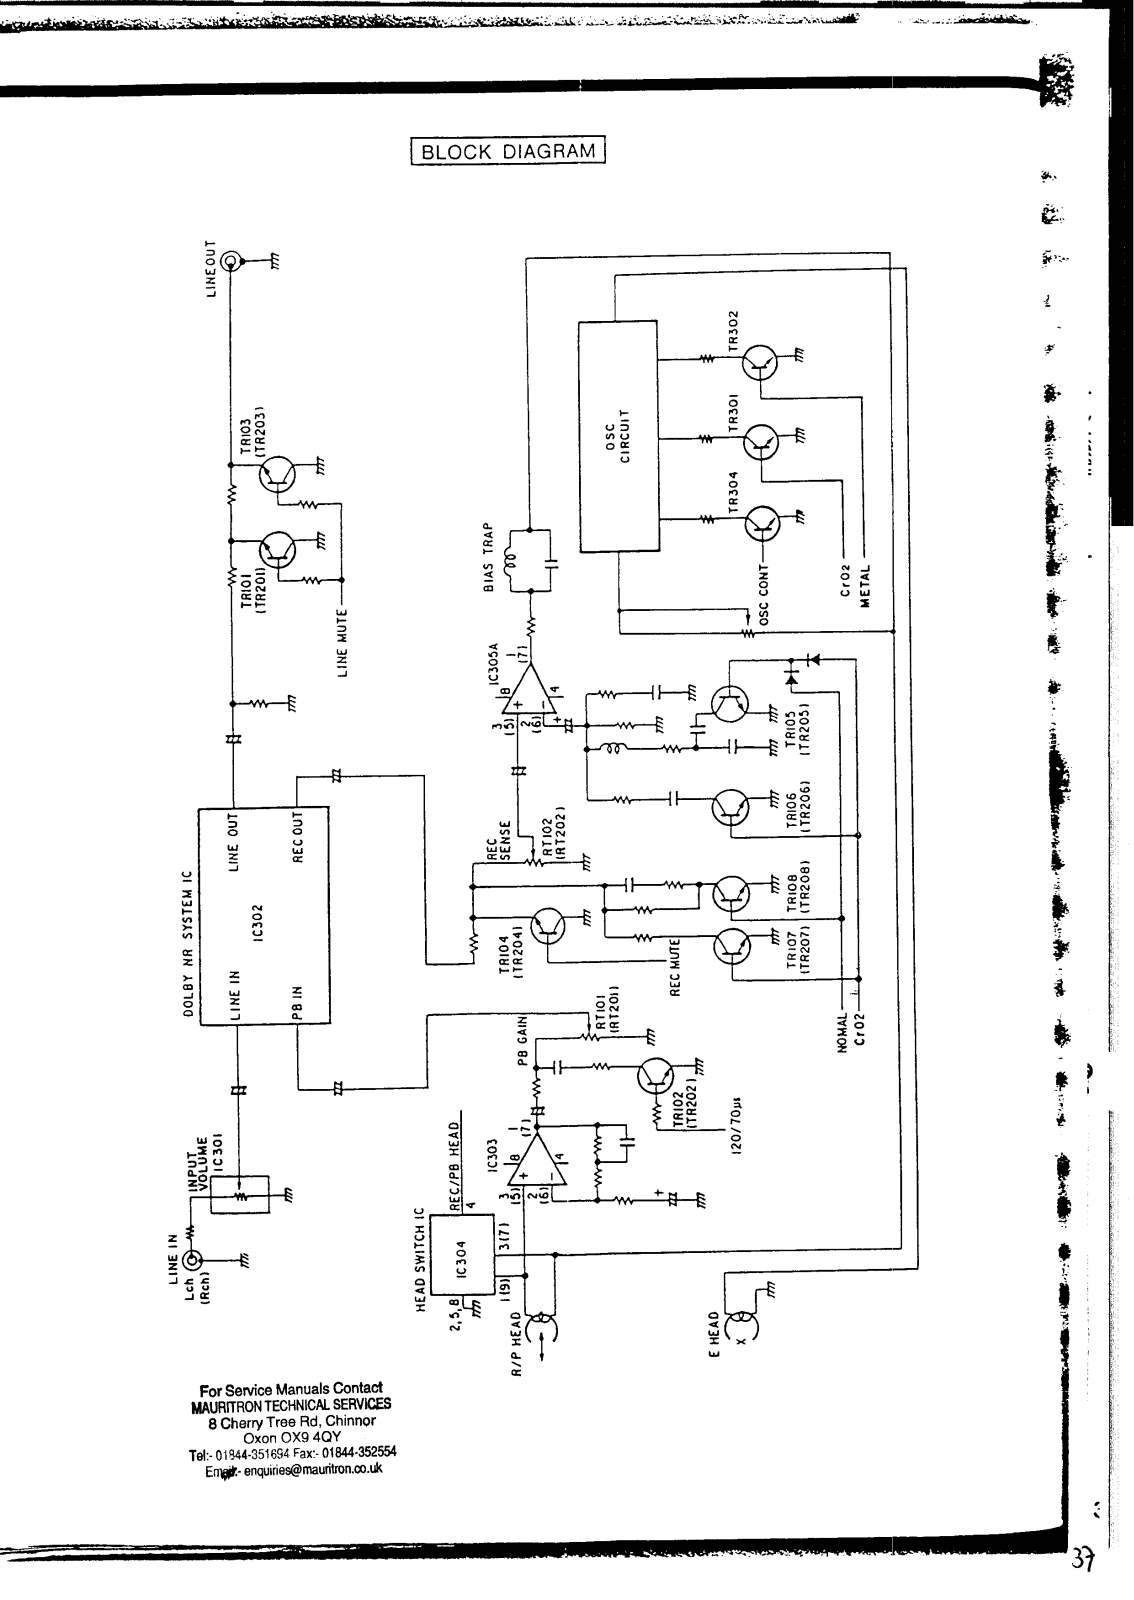 Denon UDRA-70, UDR-70, UCD-70 Schematic Diagram 5